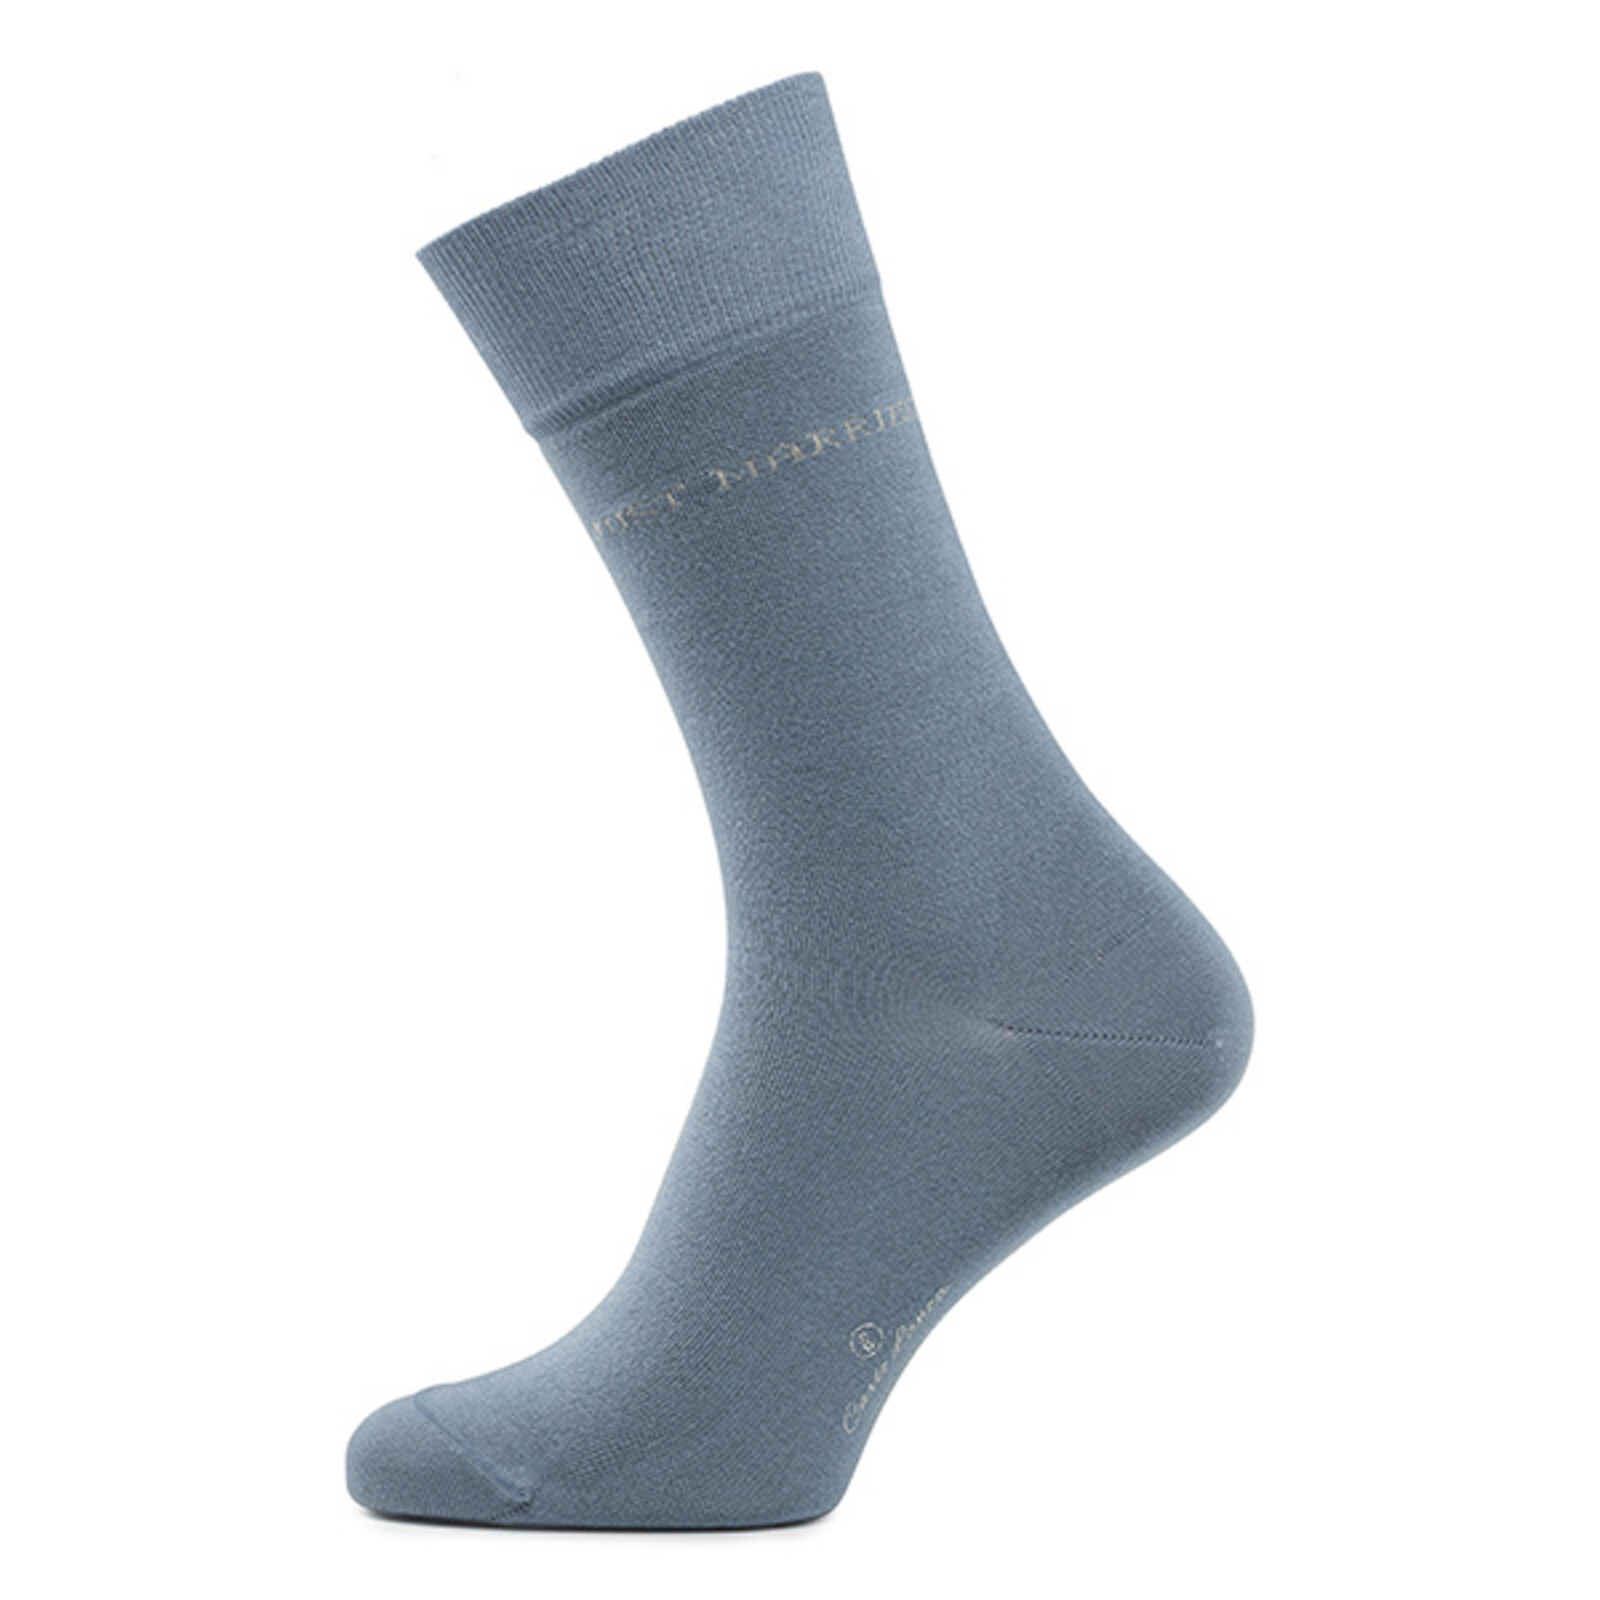 Carlo Lanza Blue grey socks | Just Married